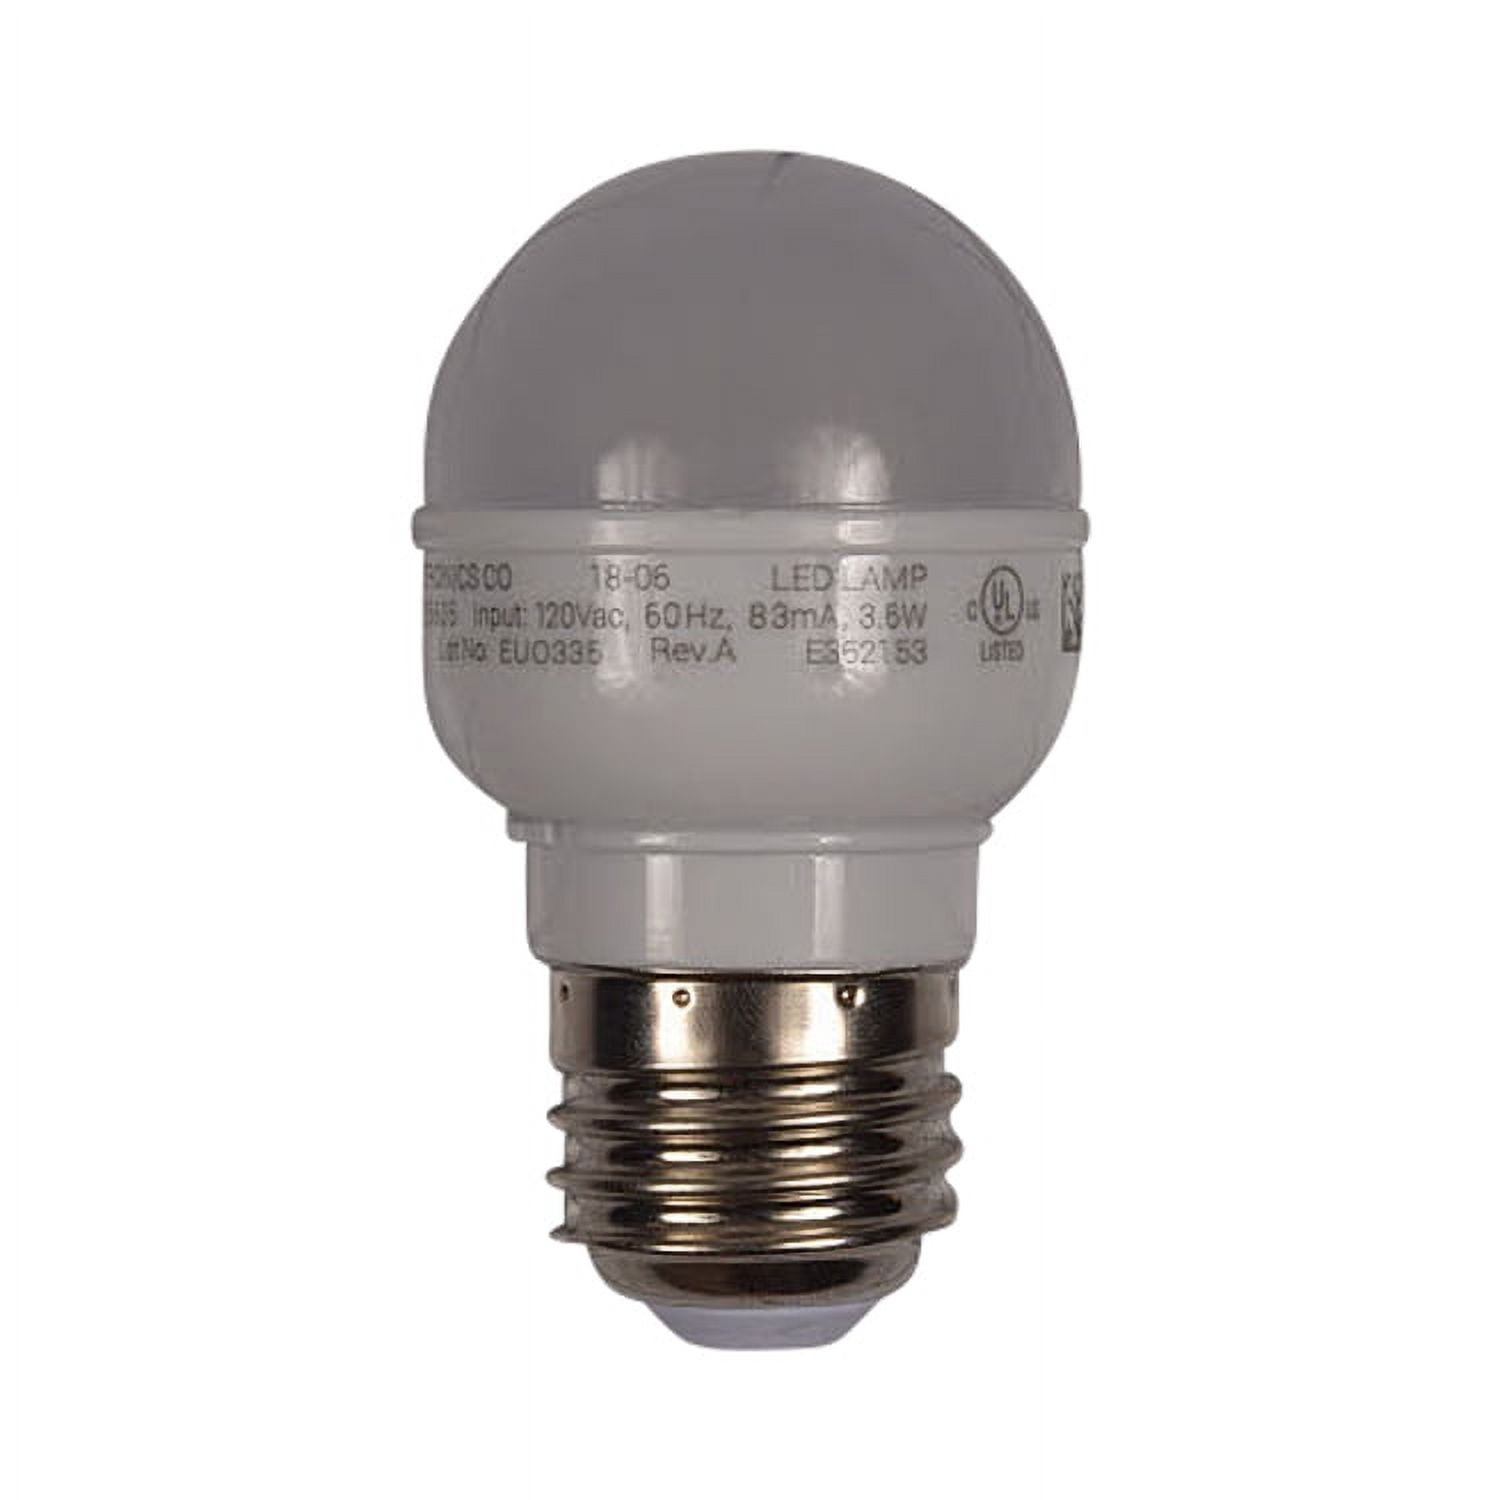 W10857122 - Whirlpool Refrigerator Light Bulb